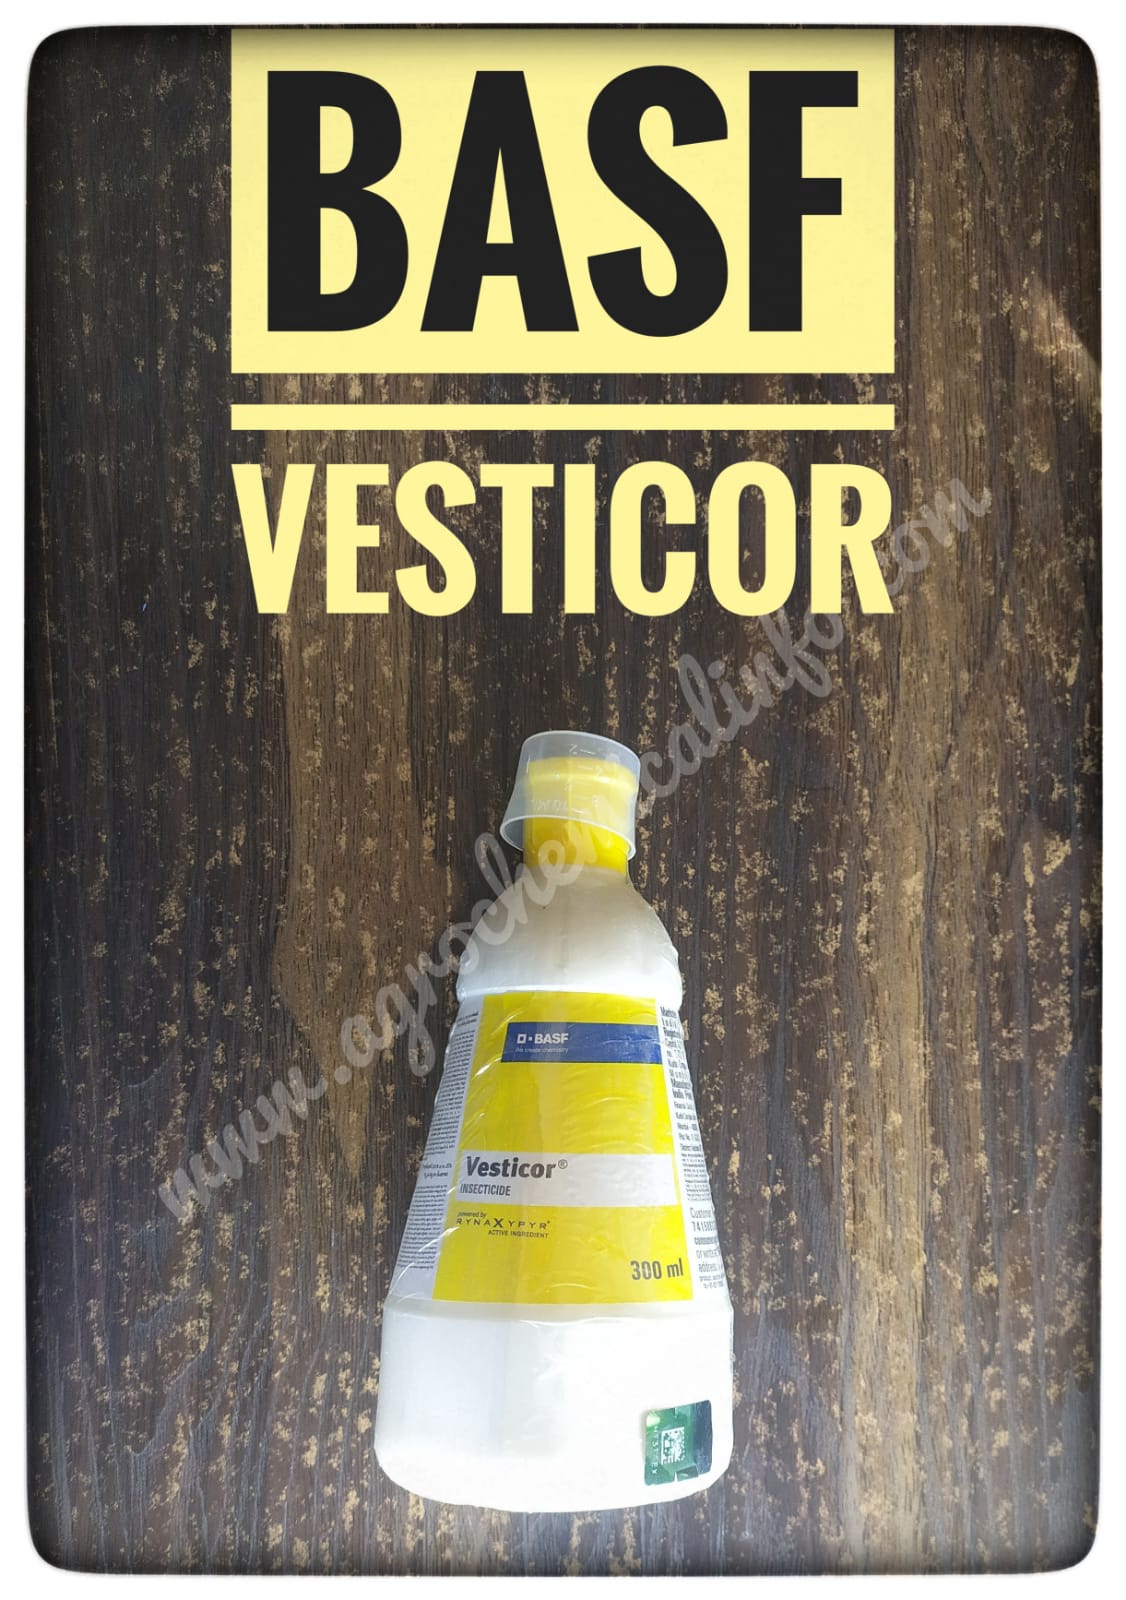 FAQs on BASF Vesticor Insecticide